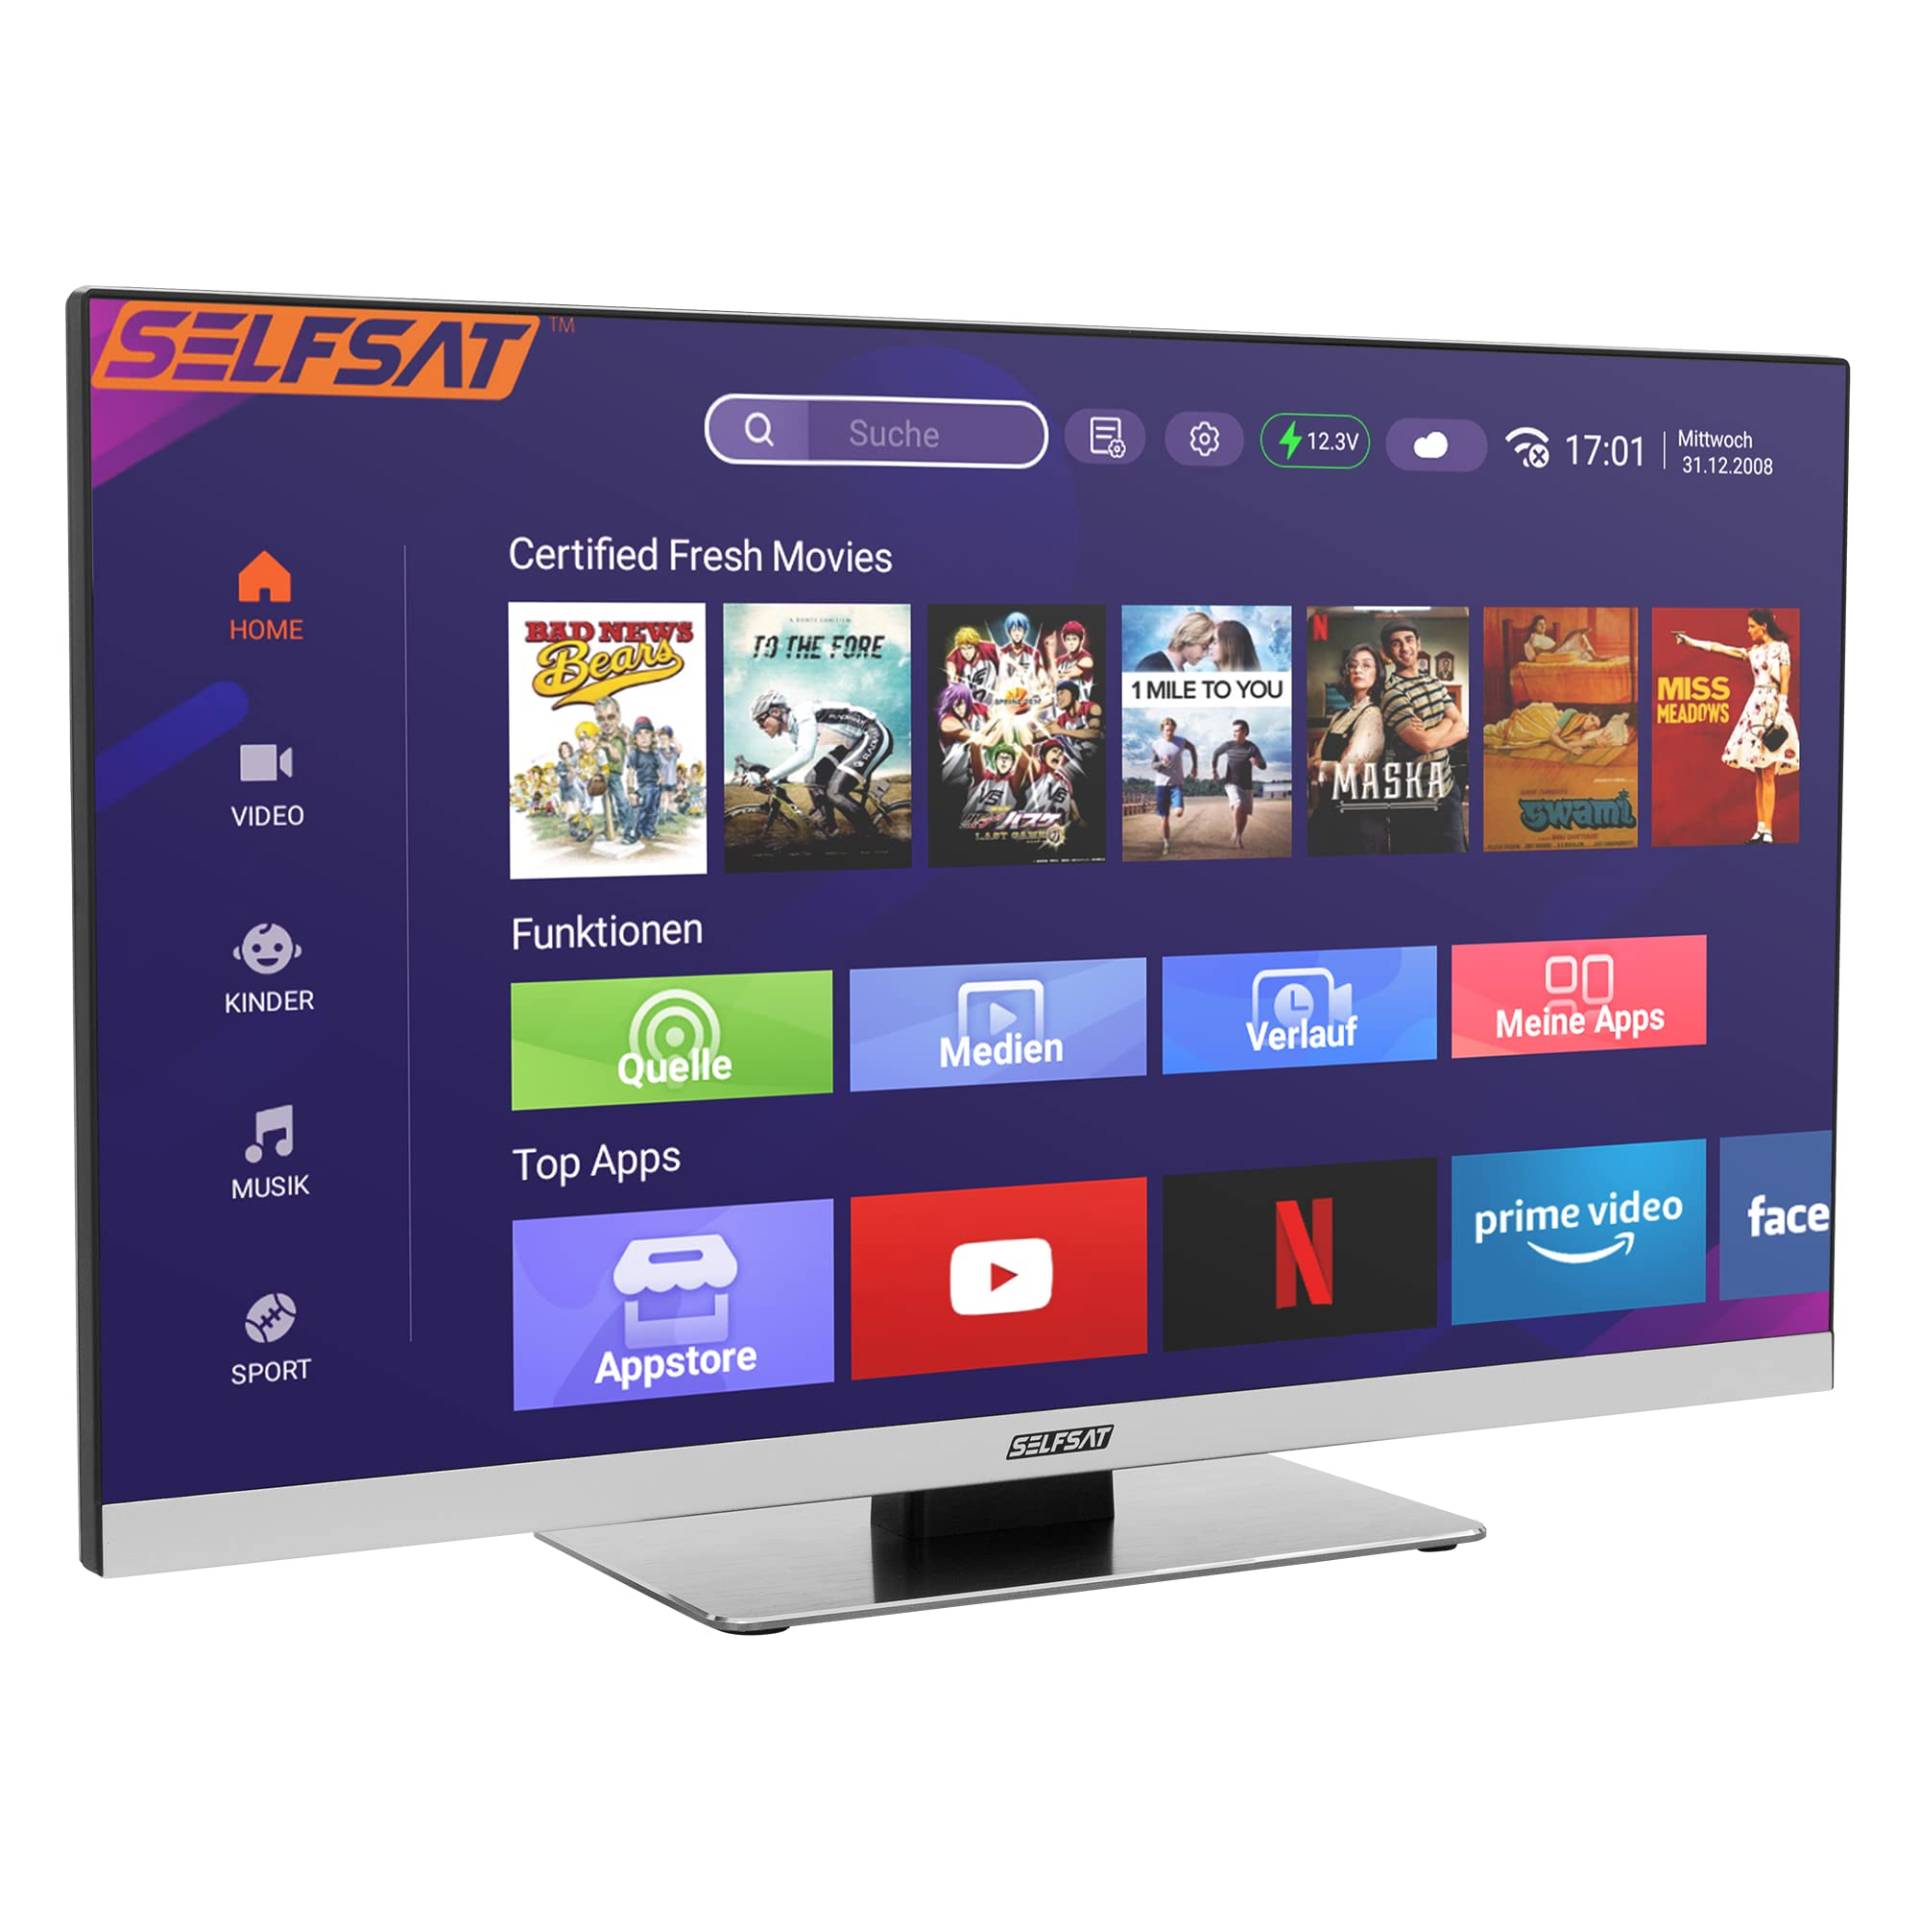 SELFSAT SMART LED TV 1255 (55cm/22) rahmenloser TV inkl. DVB-S2/C/T2 HD Tuner mit WLAN u. Bluetooth von SELFSAT